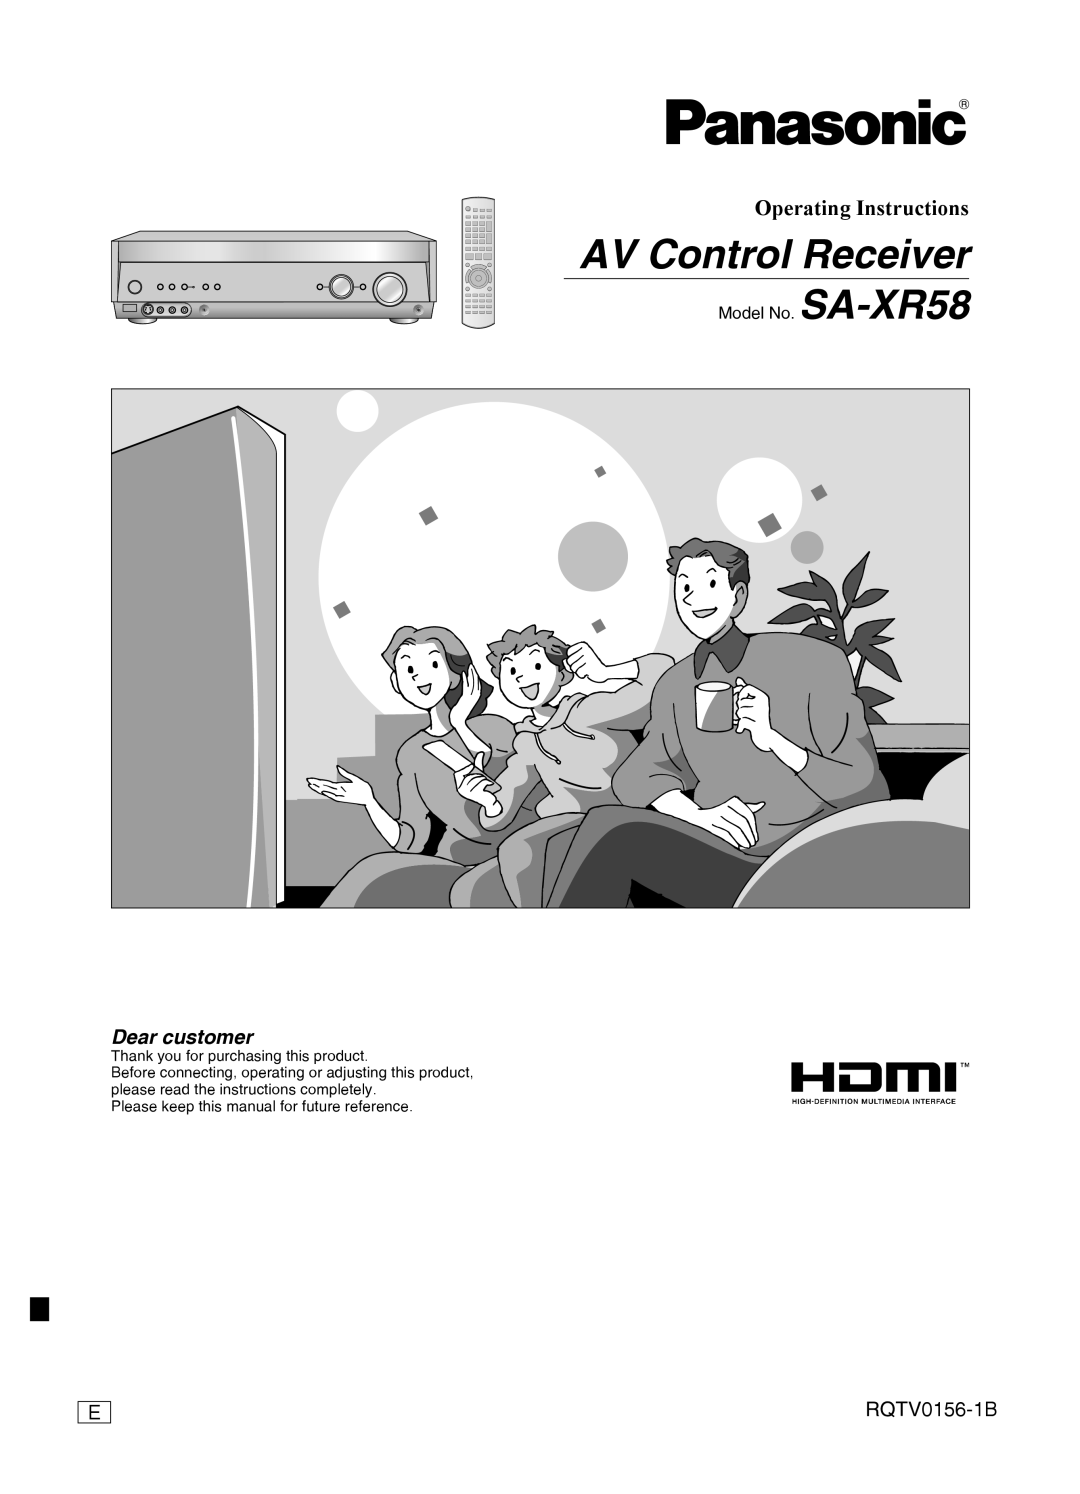 Panasonic manual Dear customer, Model No. SA-XR58, AV Control Receiver, Operating Instructions, RQTV0156-1B 